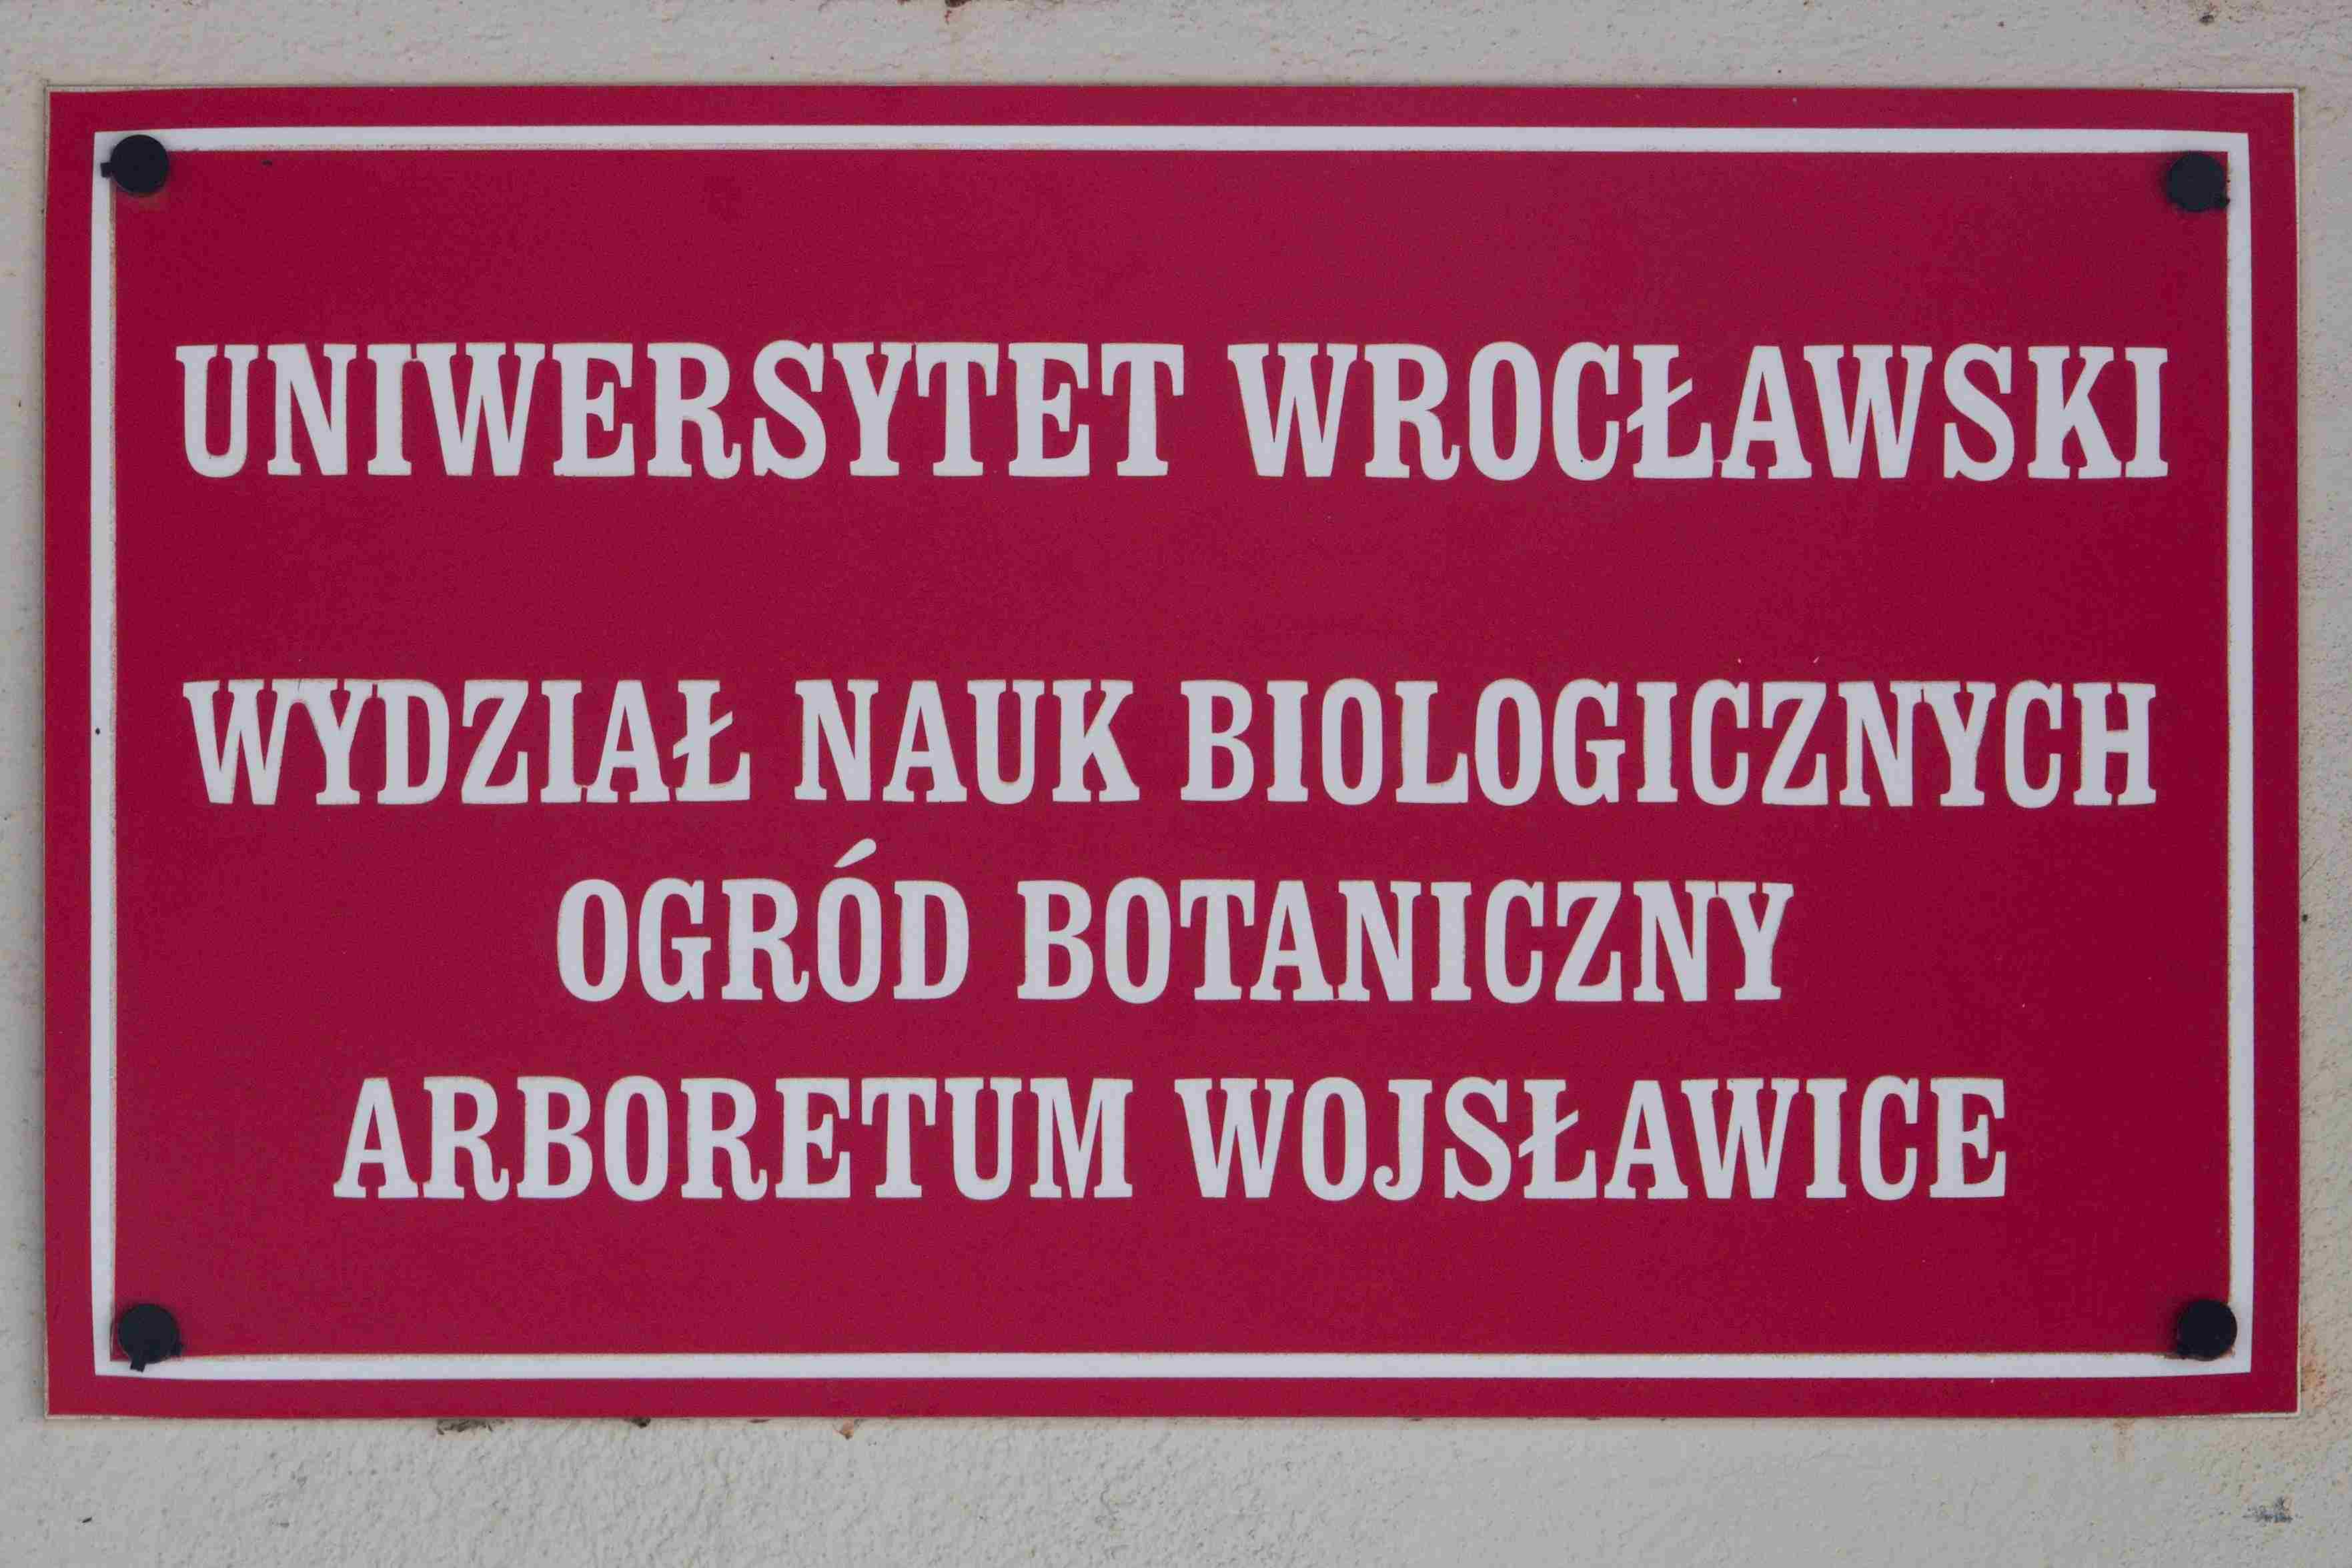 Arboretum Wojslawice_2024_05_31_000 (1)_result